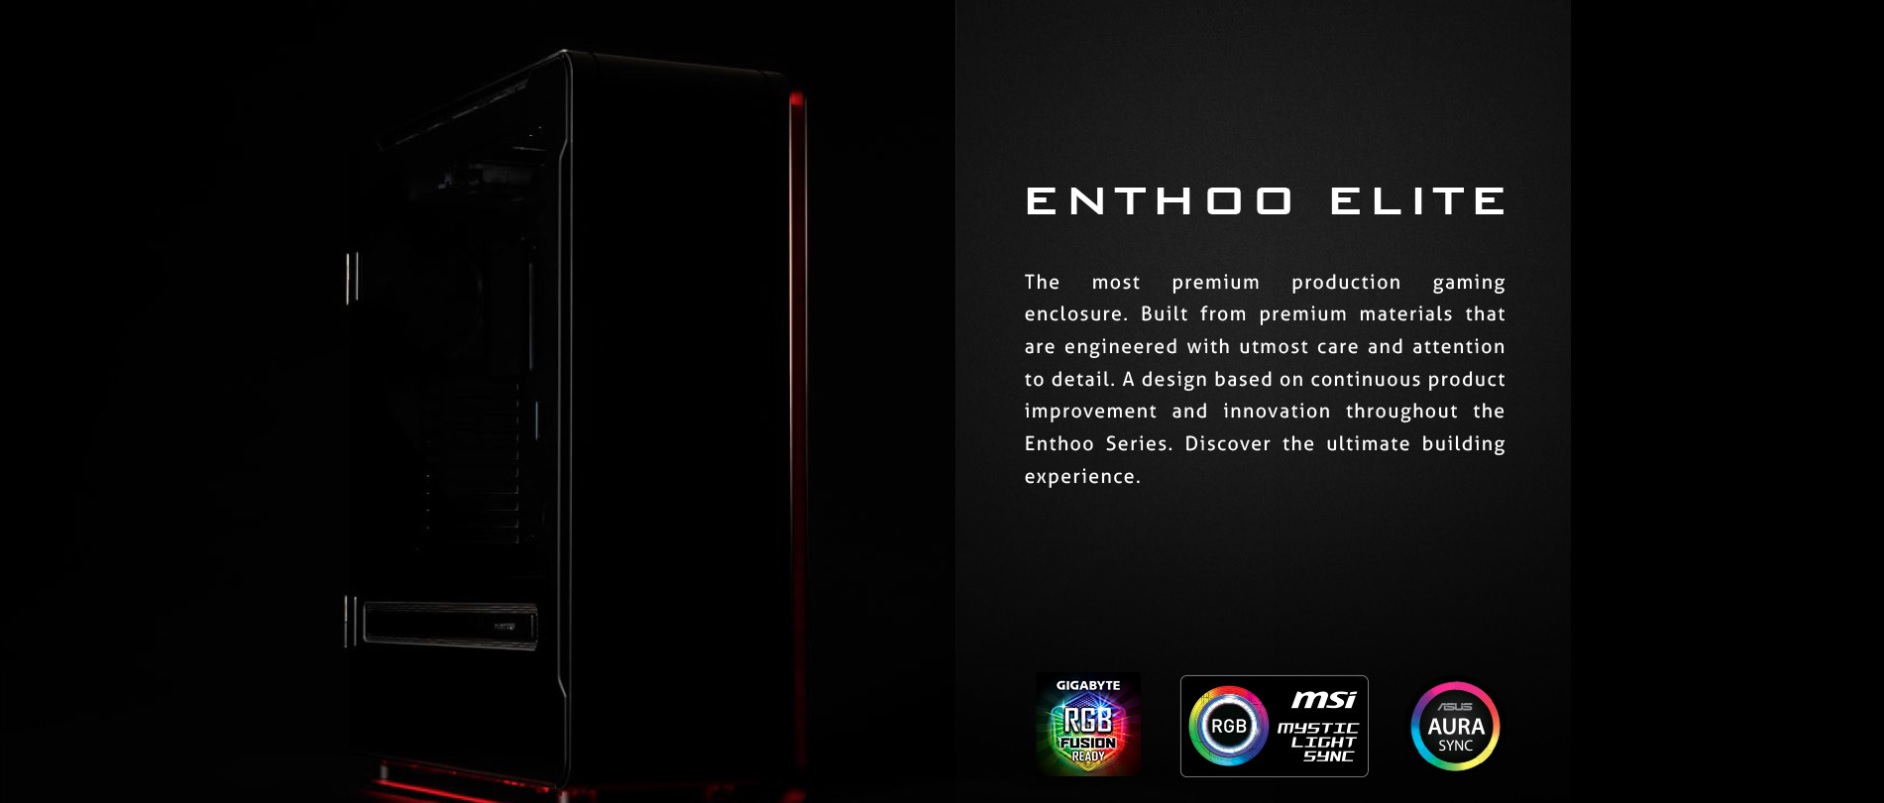 Phanteks Enthoo Elite Extreme RGB Lighting, Tempered Glass Window, Dual System Support giới thiệu